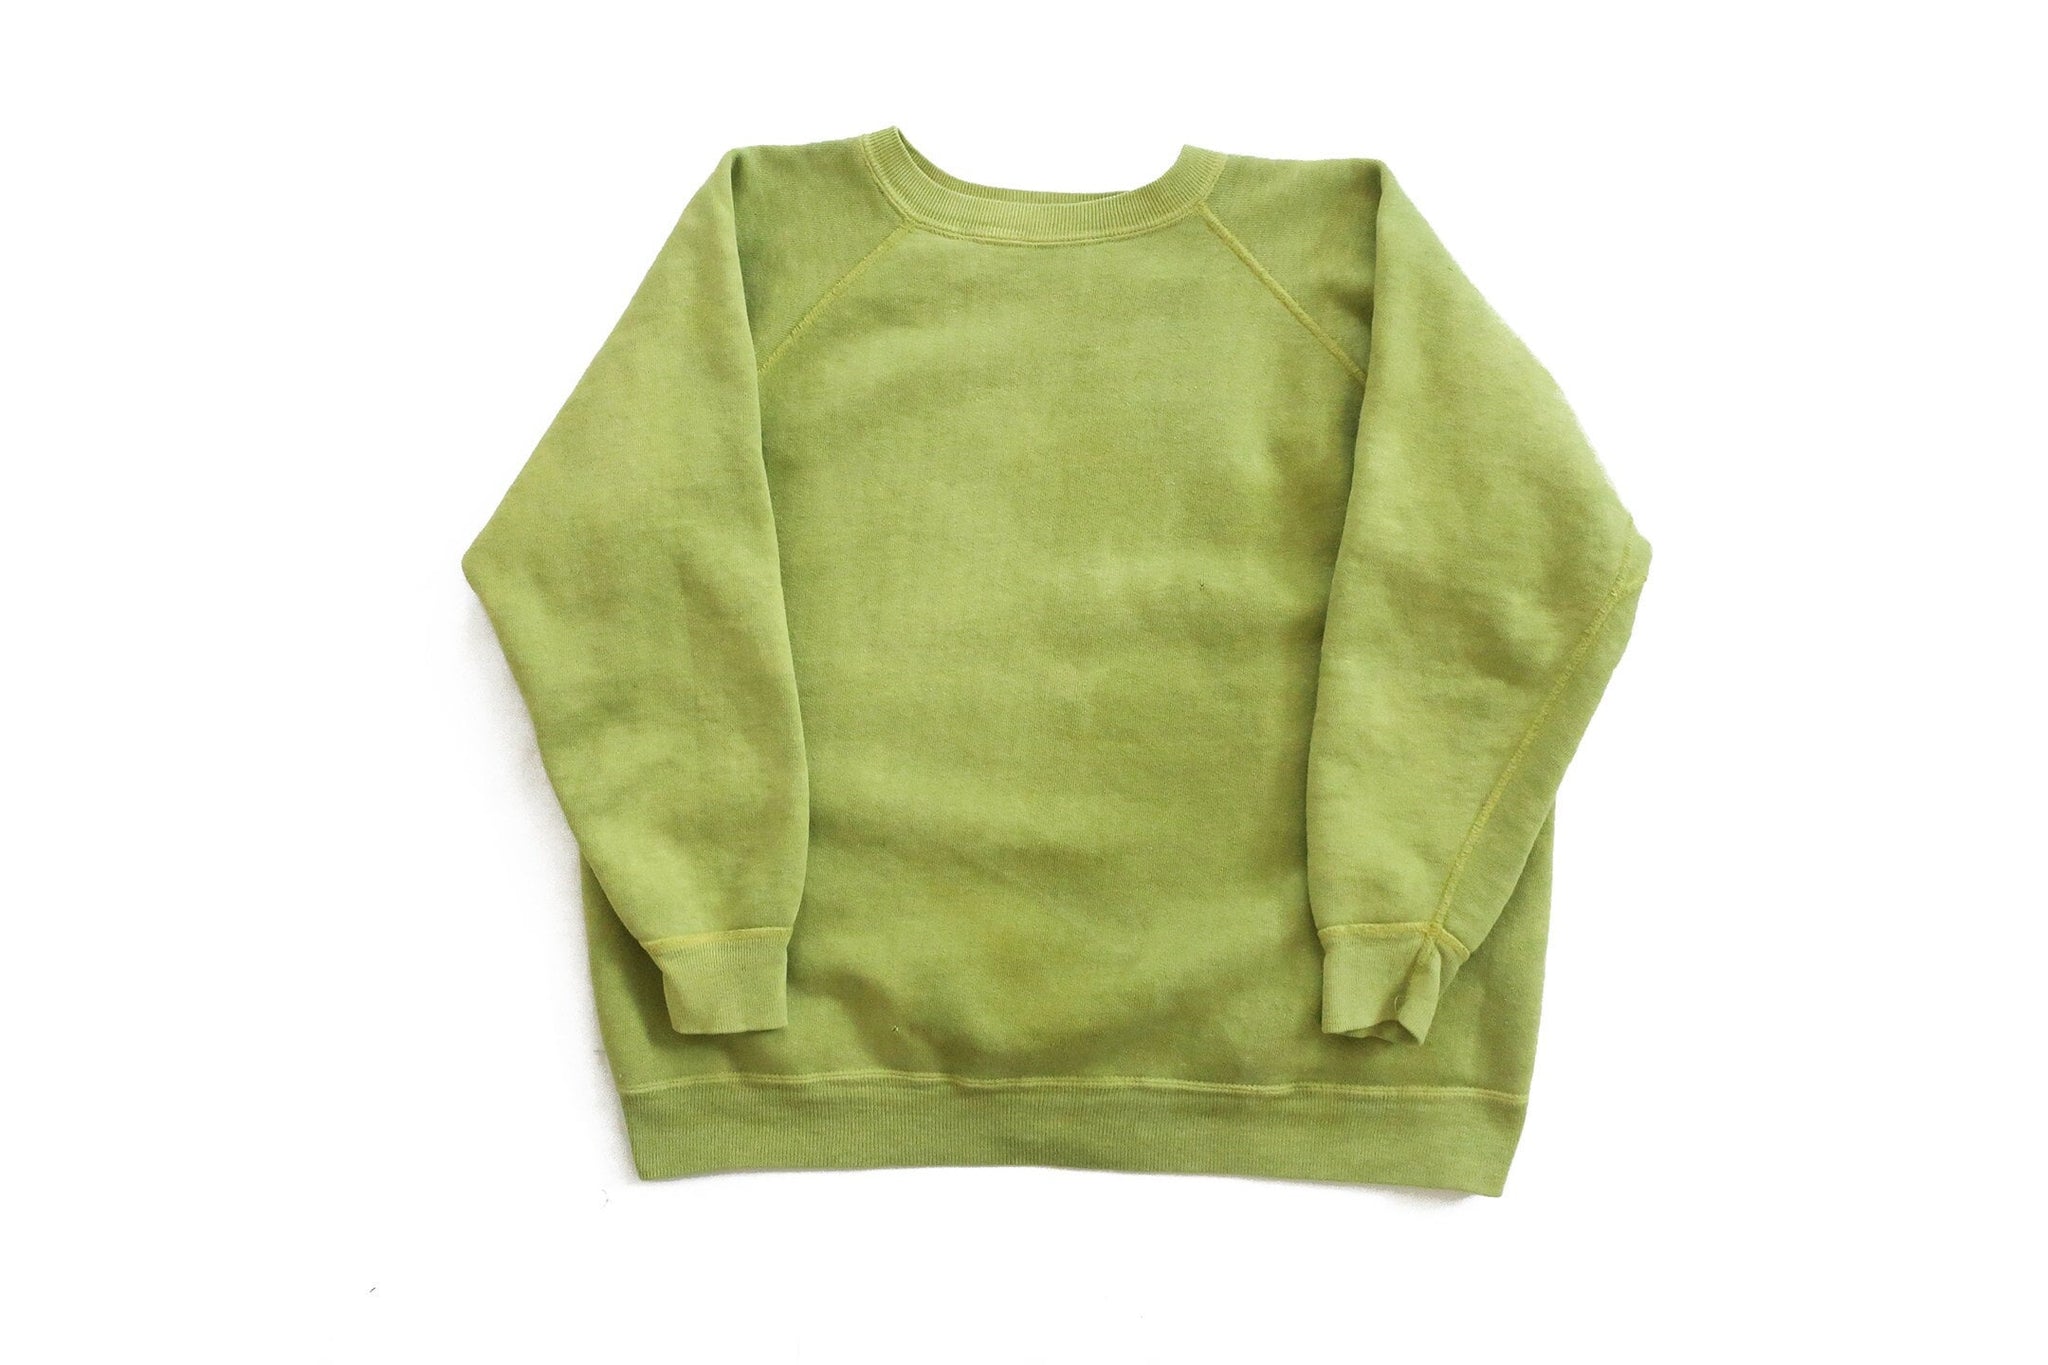 faded sweatshirt / 60s sweatshirt / 1960s moss green faded raglan crew neck gusset cotton sweatshirt Medium